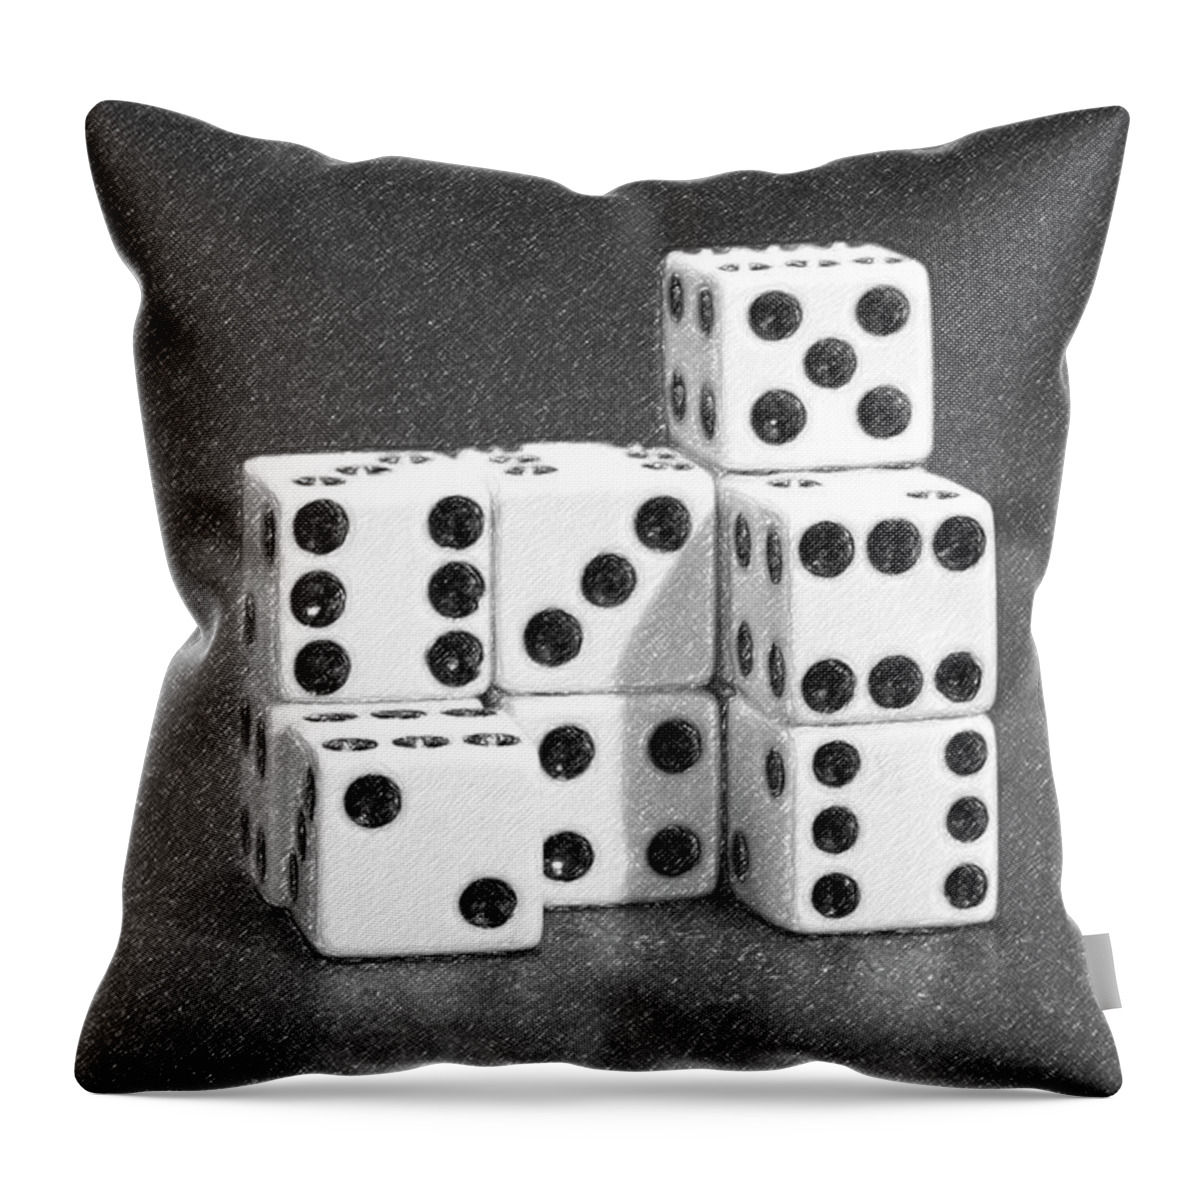 Dice Throw Pillow featuring the photograph Dice Cubes III by Tom Mc Nemar